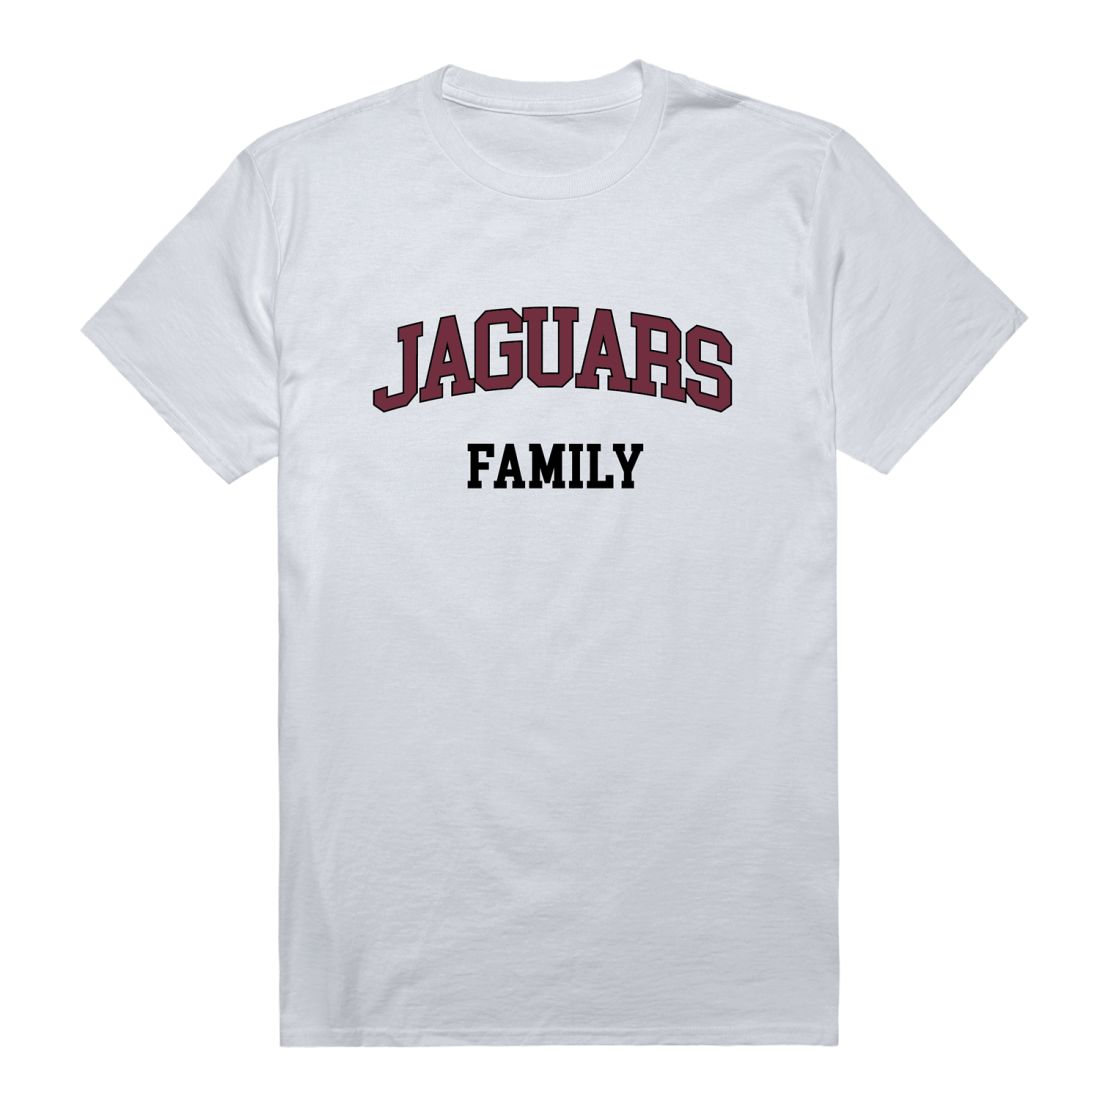 Texas A&M University-San Antonio Jaguars Family T-Shirt